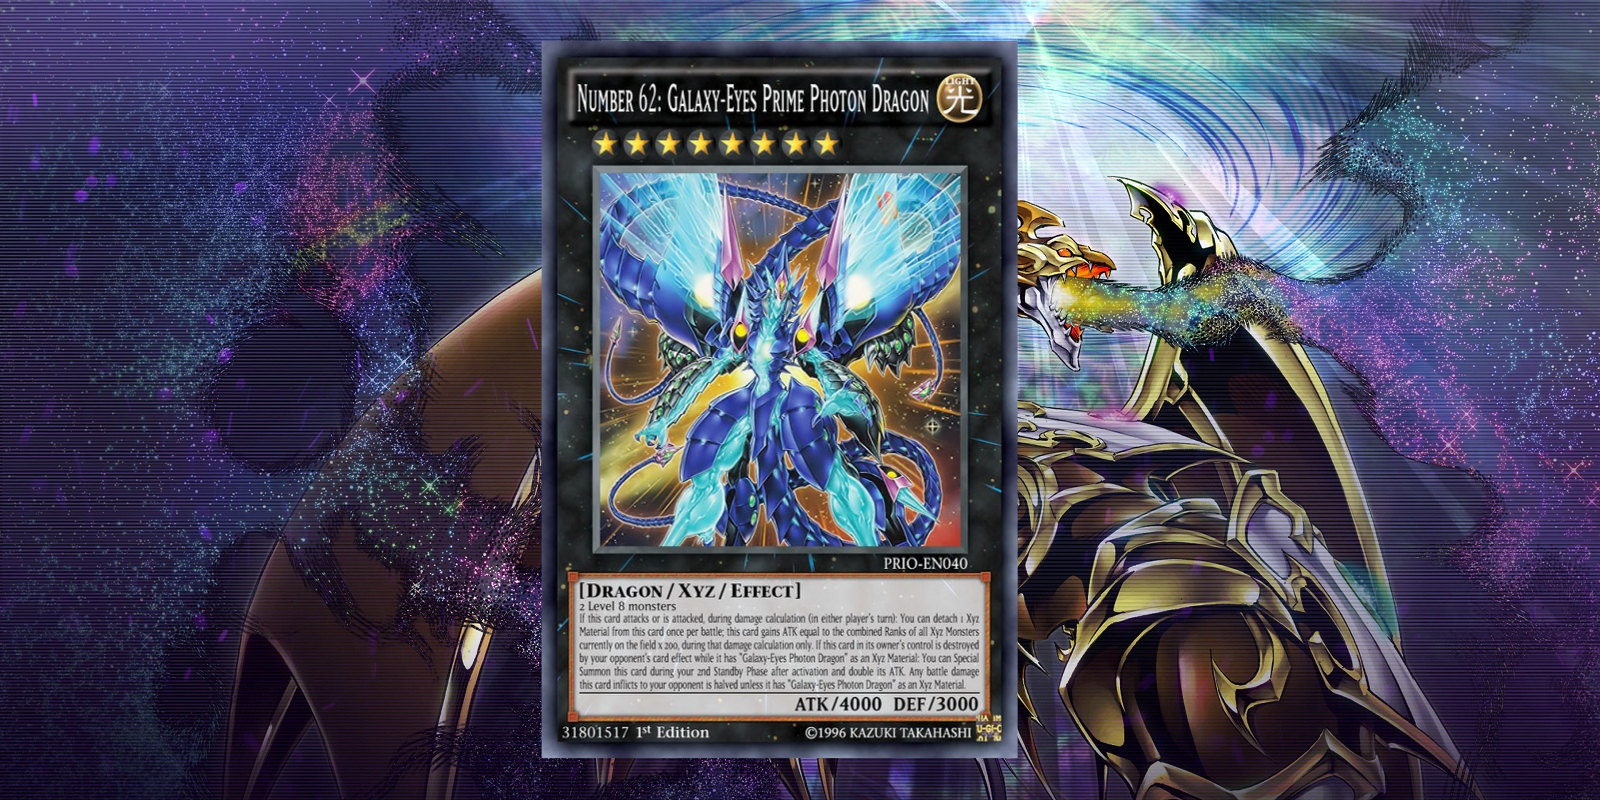 Yu-Gi-Oh! Number 62 Galaxy Eyes Prime Photon Dragon card